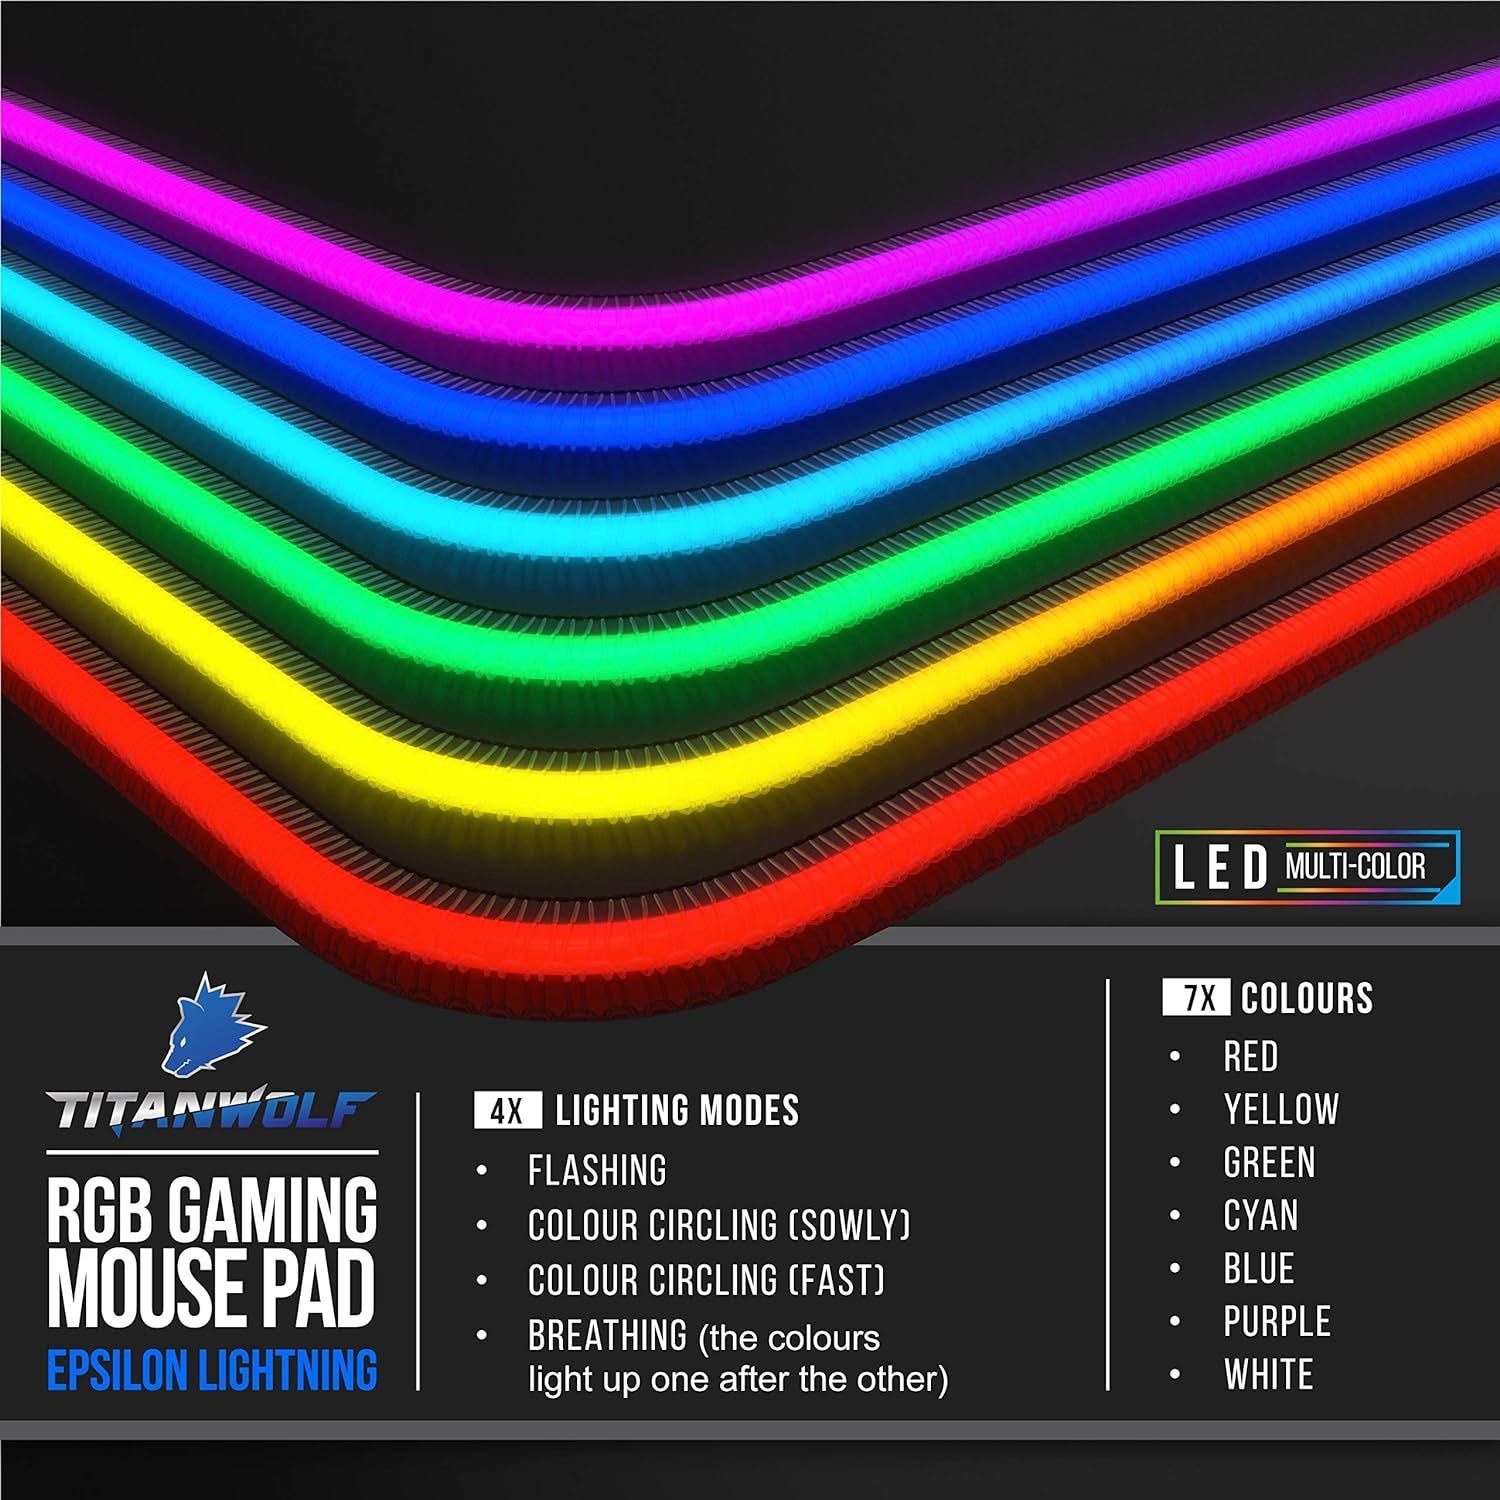 TITANWOLF XXL RGB Gaming Mouse Mat Pad - 800x300mm Novo cx selada!